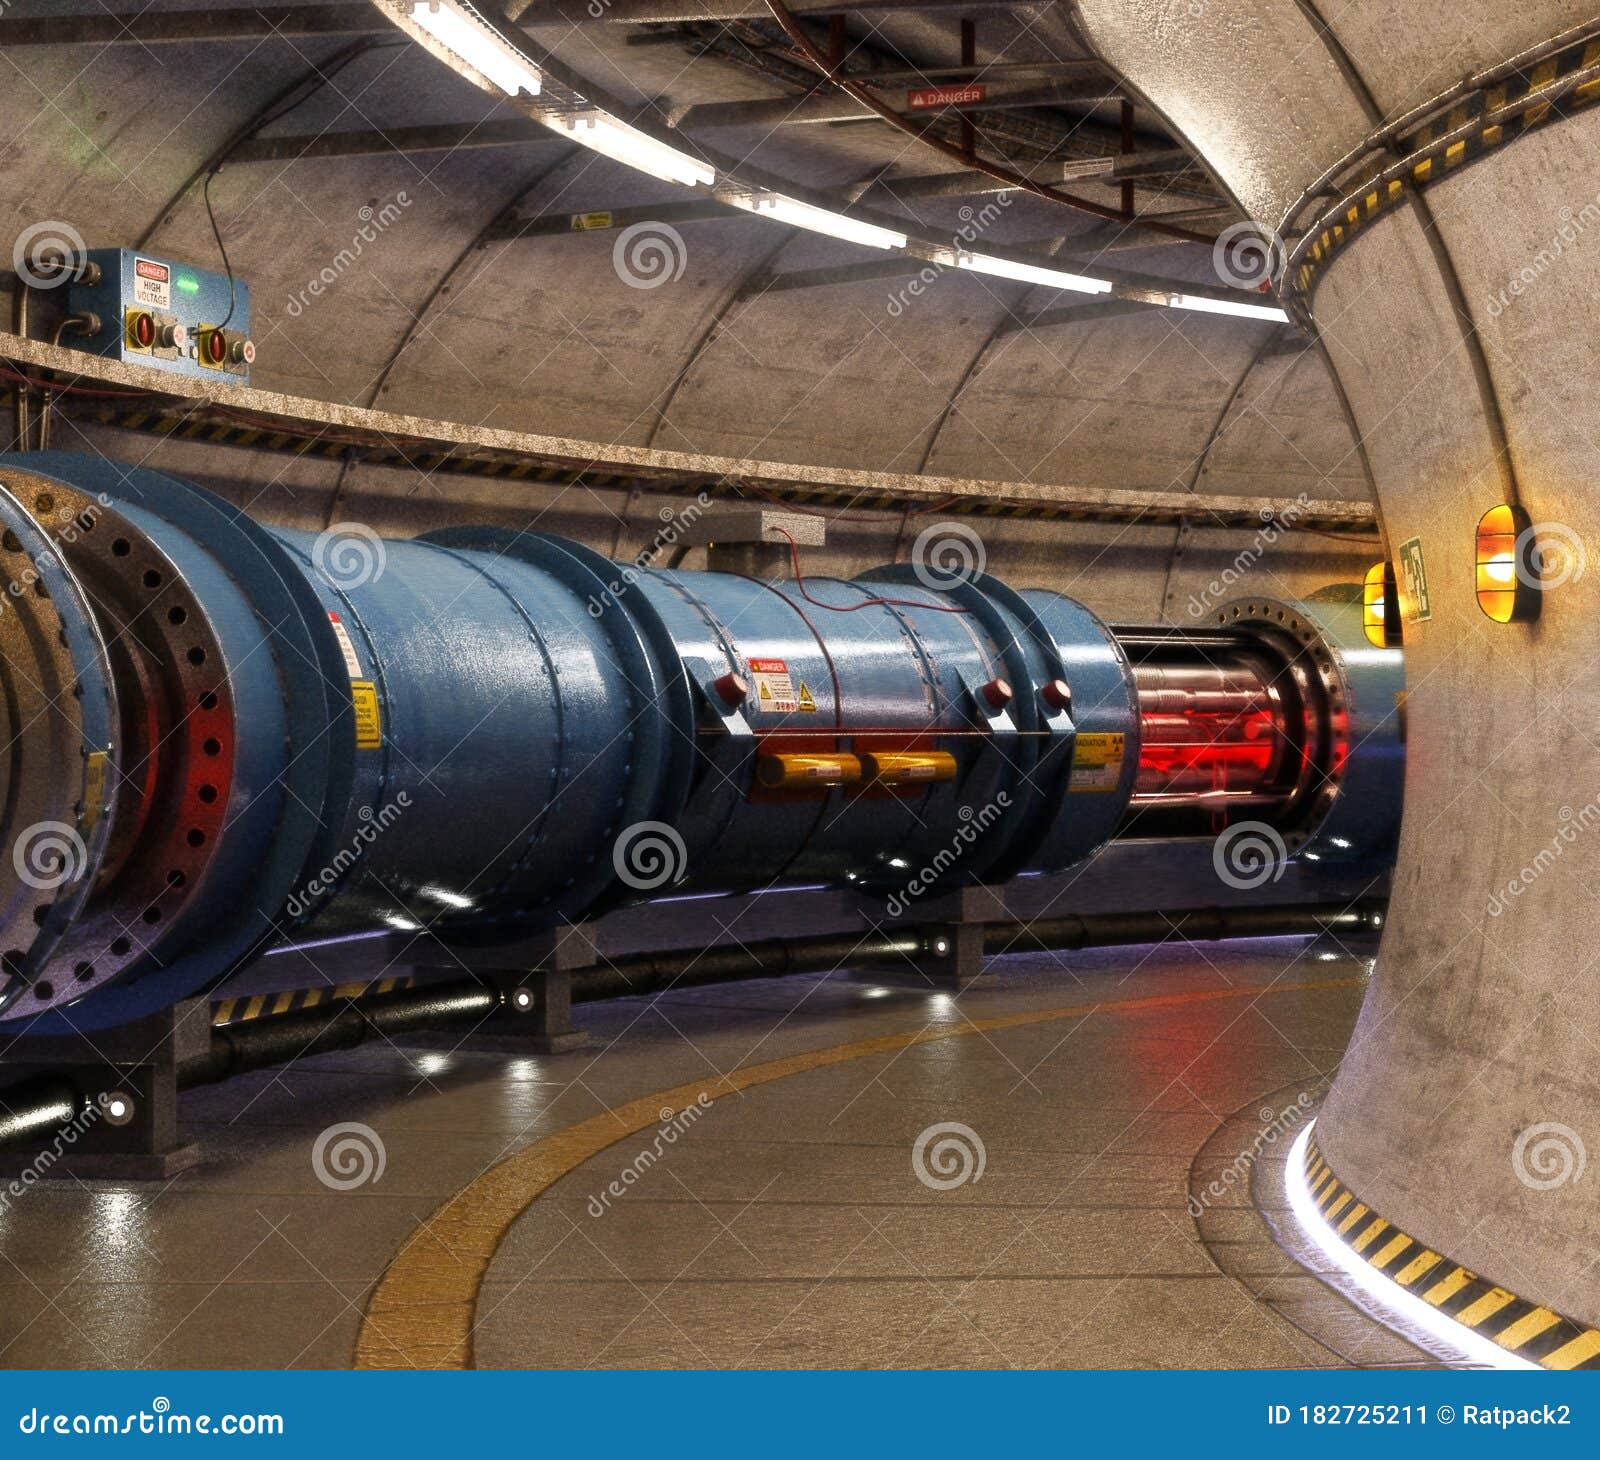 research supercollider machine, underground particle accelerator